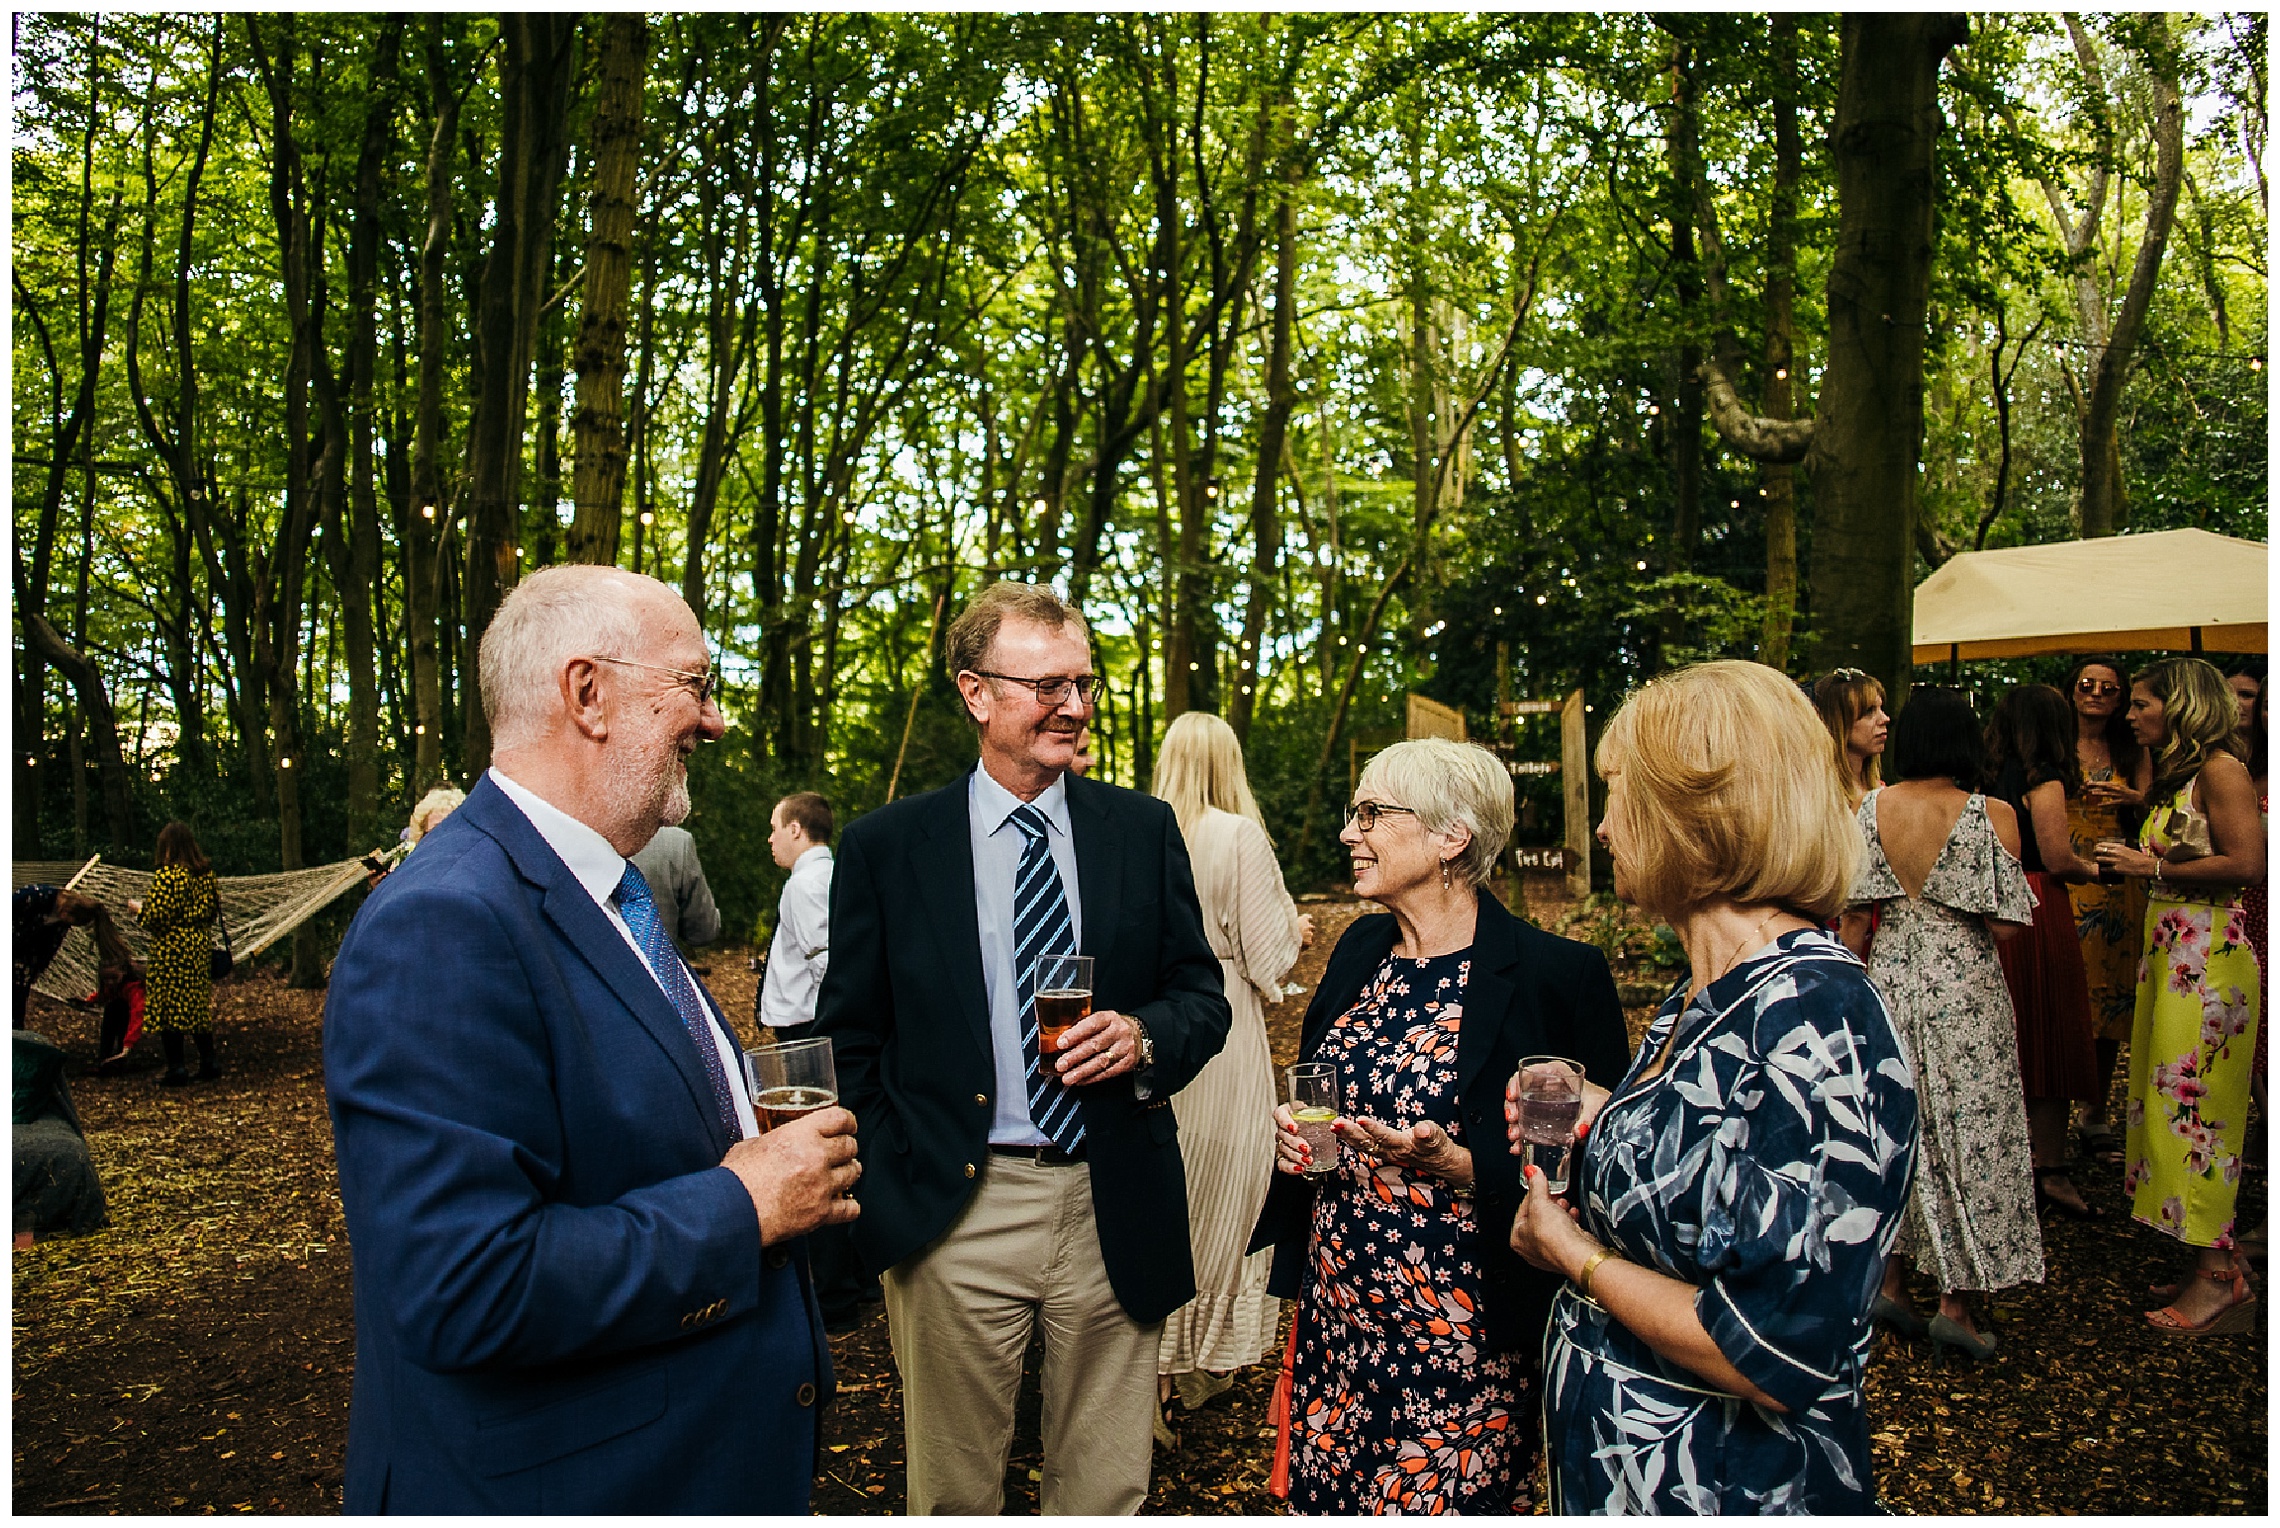 wedding guests mingle in woodland weddings venue